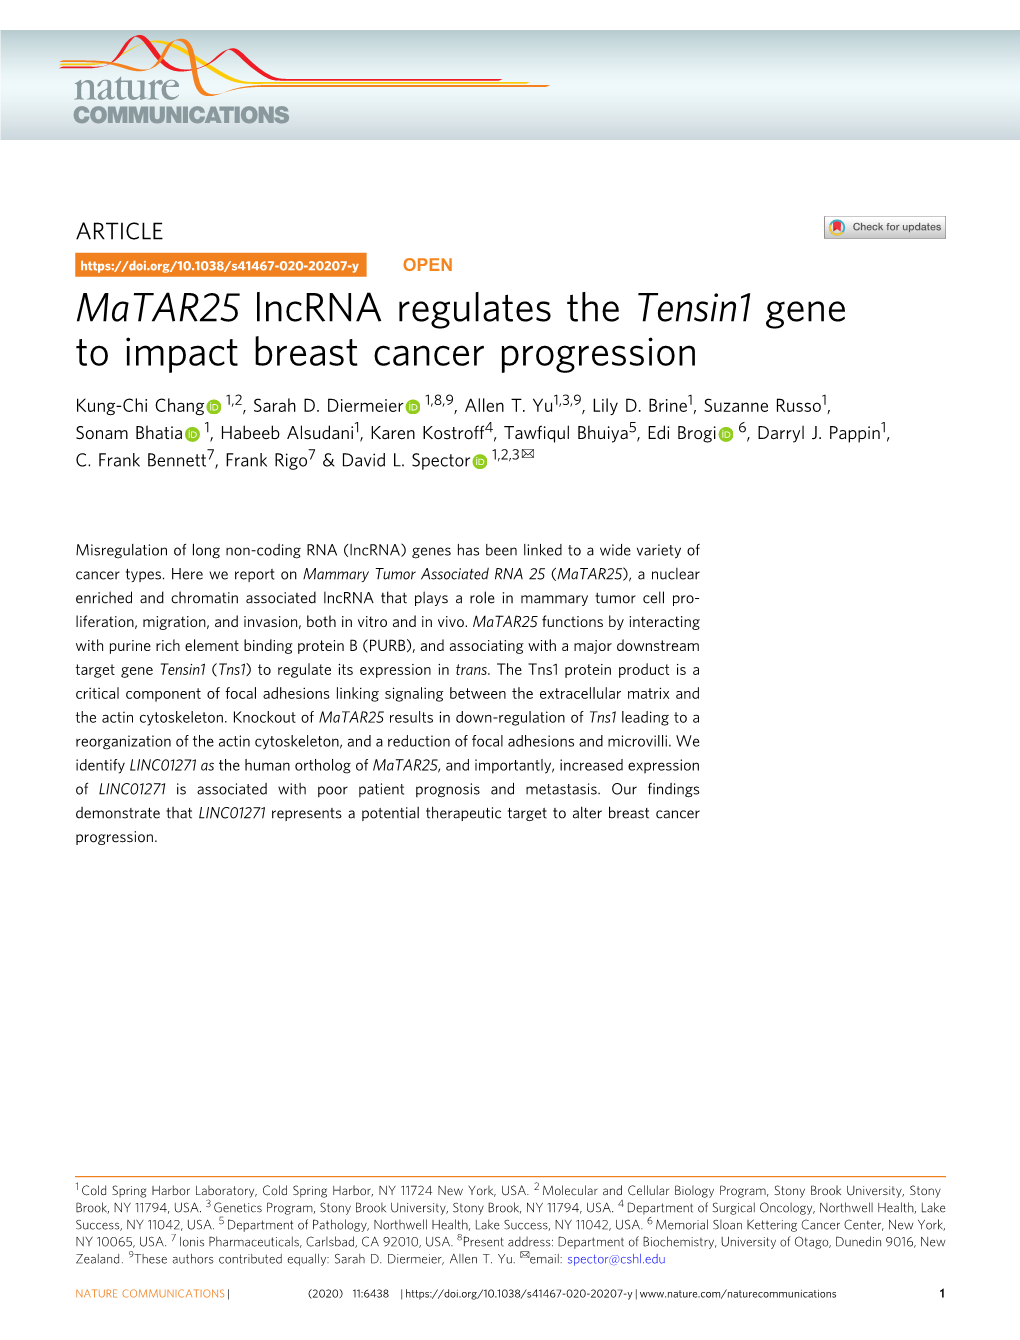 Matar25 Lncrna Regulates the Tensin1 Gene to Impact Breast Cancer Progression